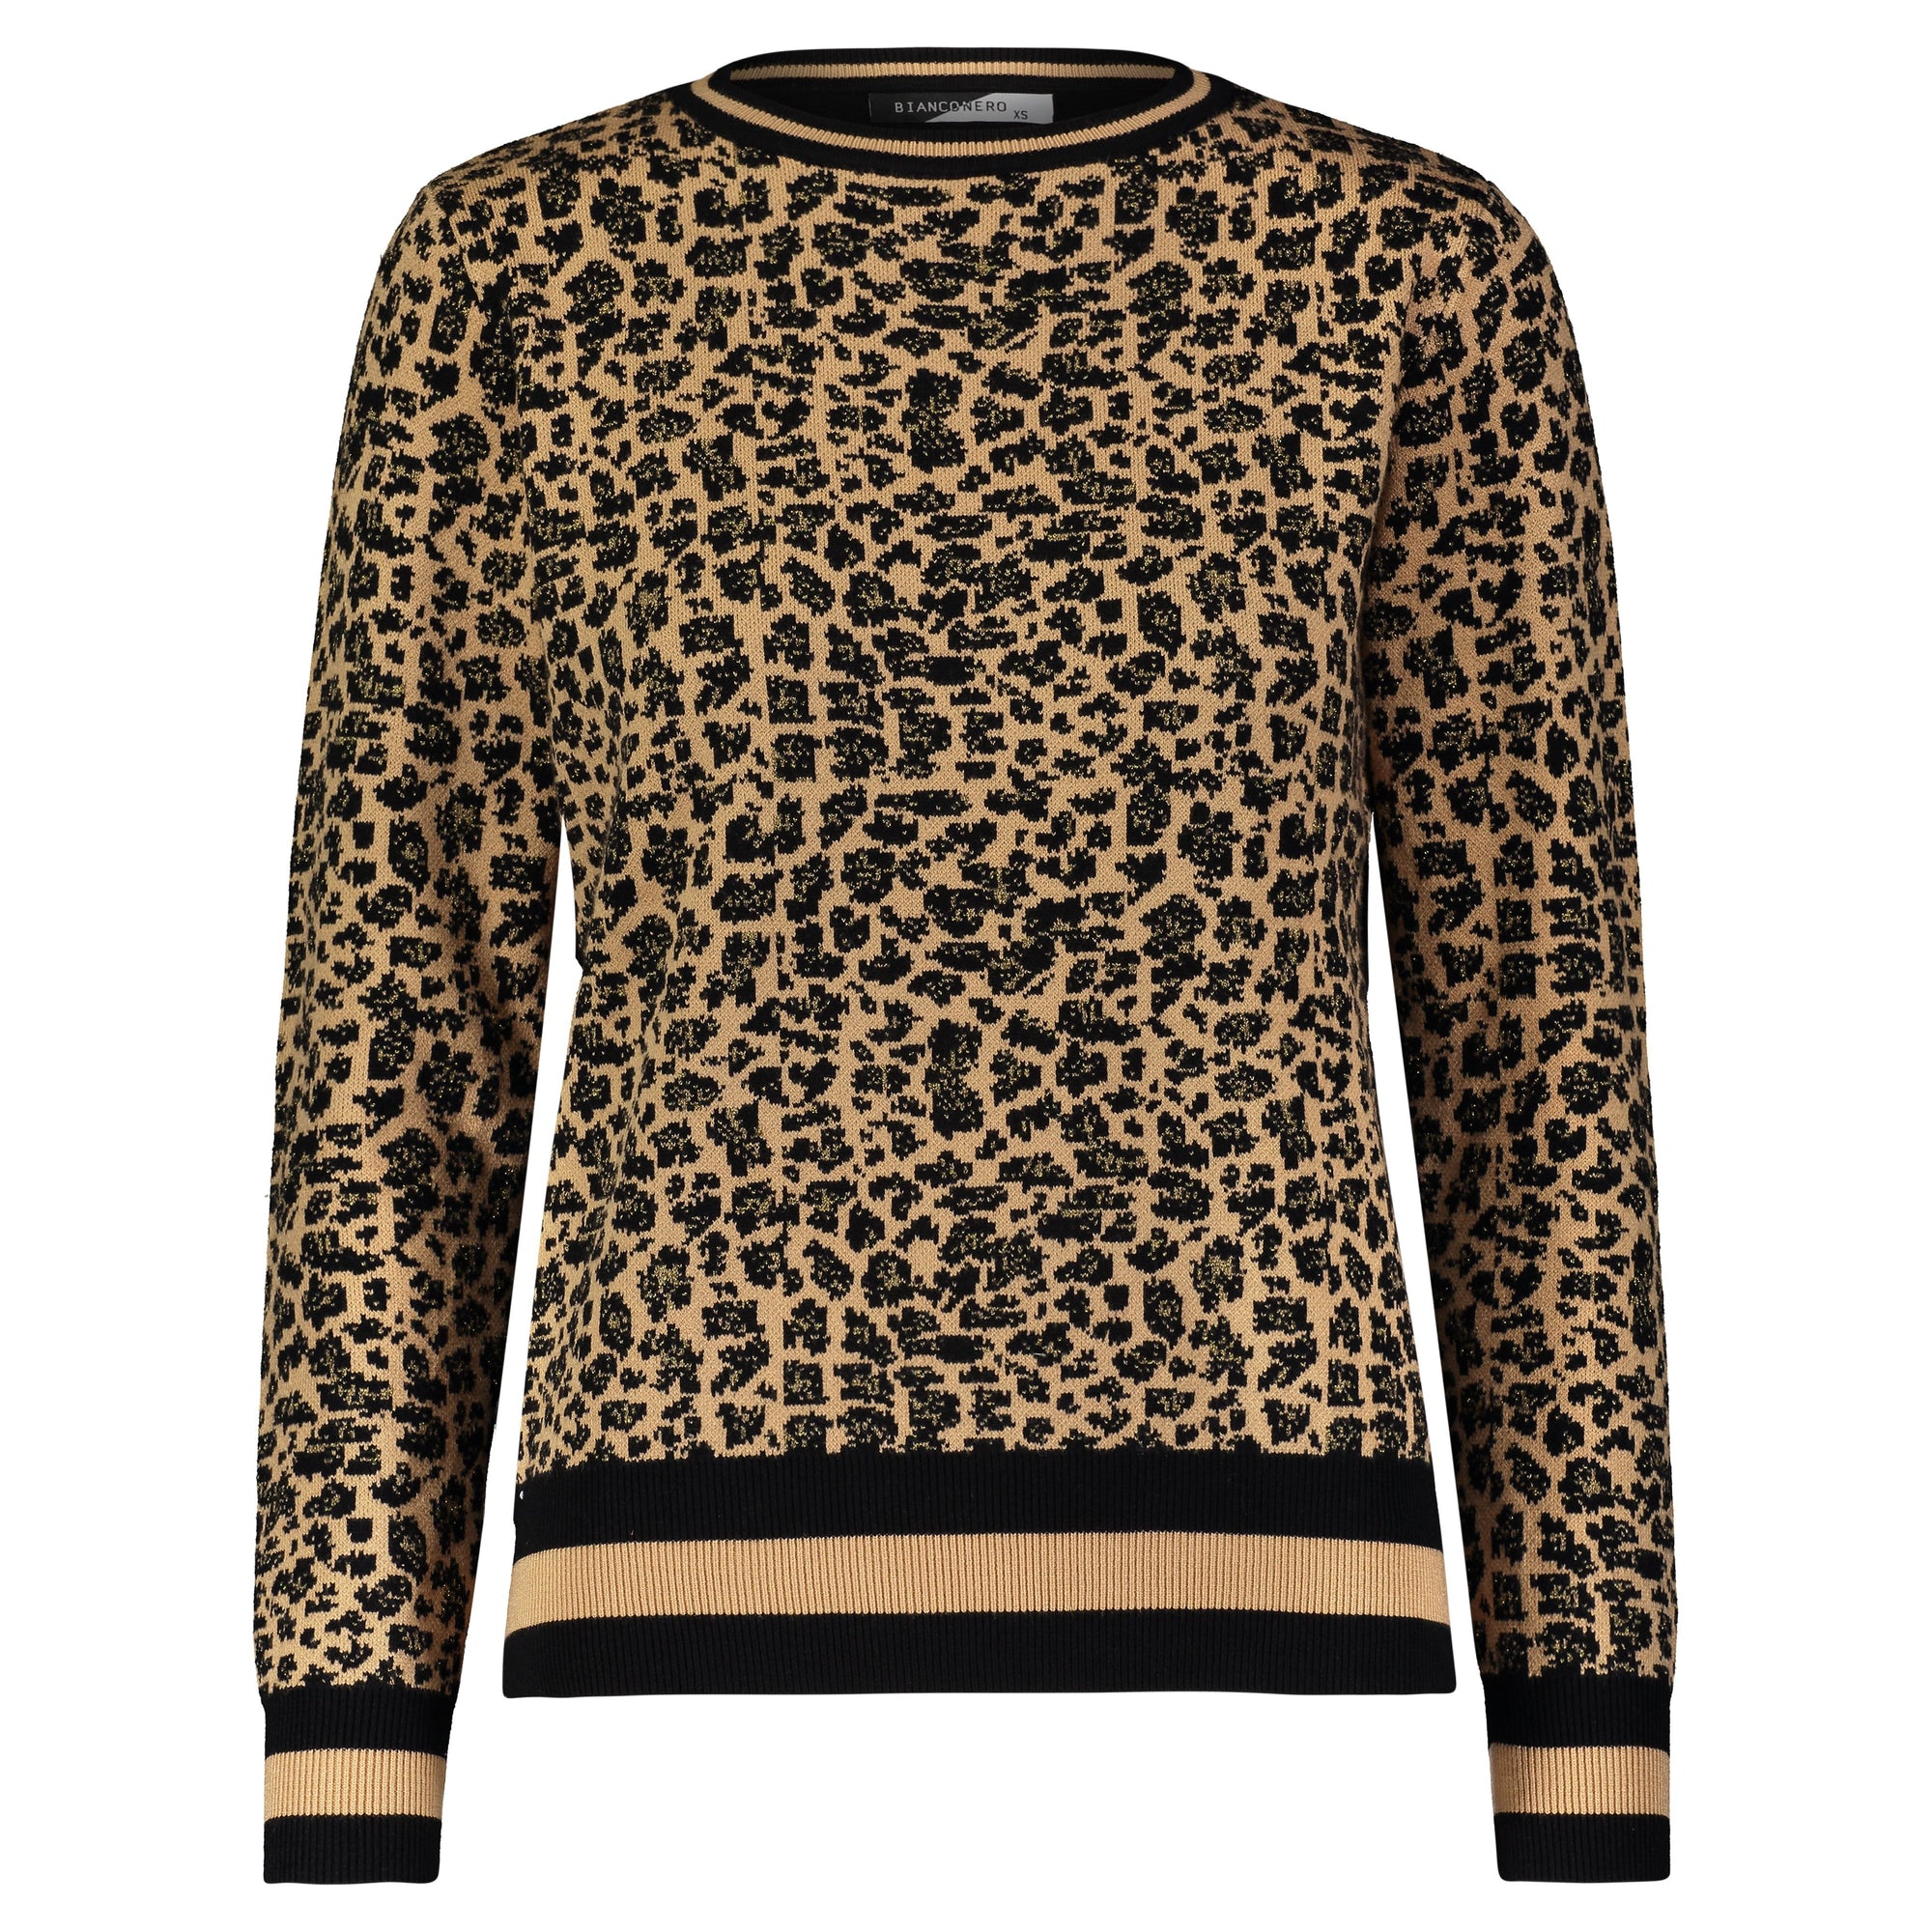 Bianco Nero Knit Leopard Top-Top-Mementos